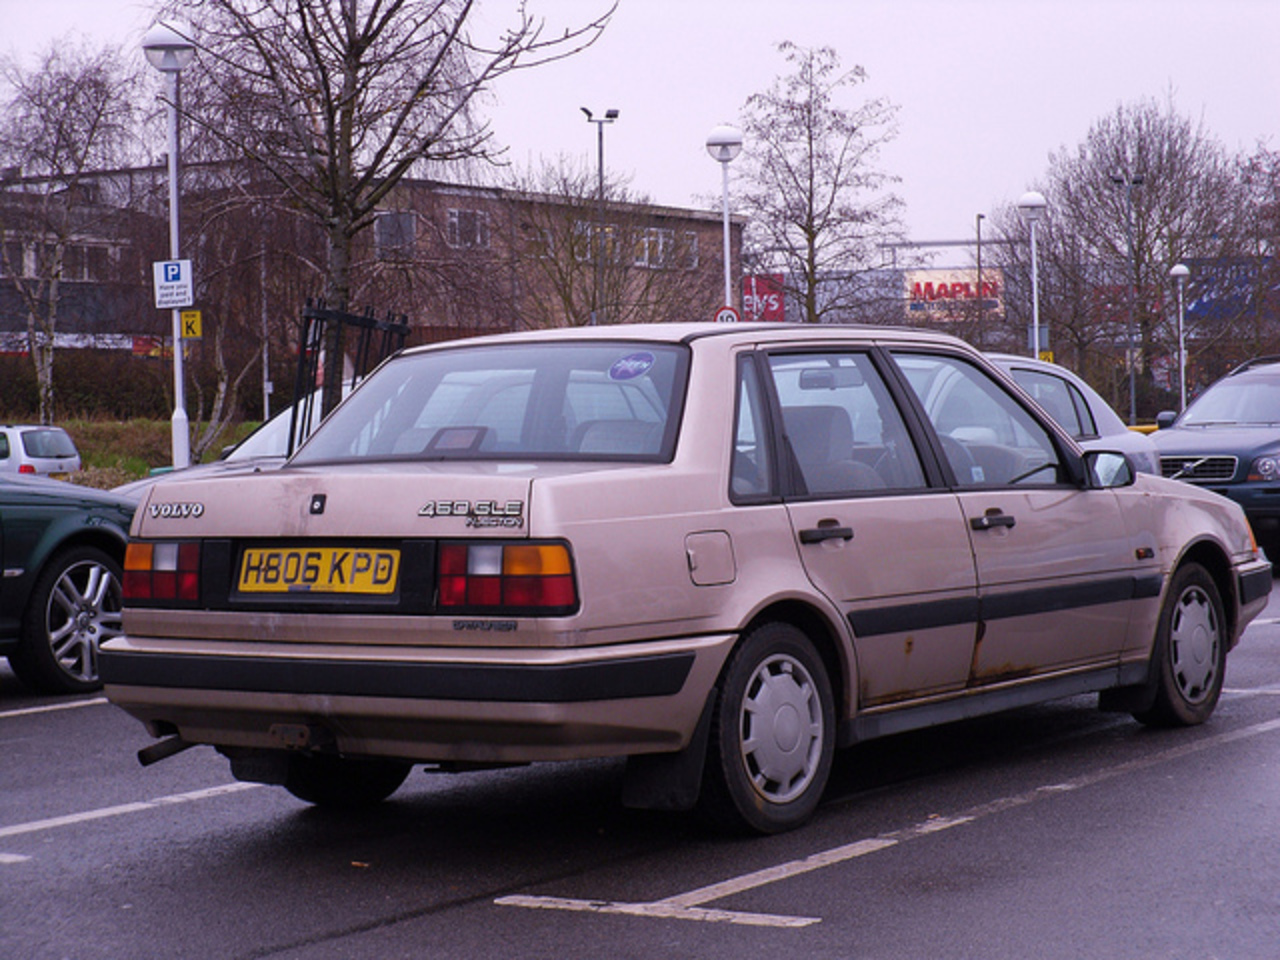 1990/91 Volvo 460 GLE Saloon. | Flickr - Photo Sharing!